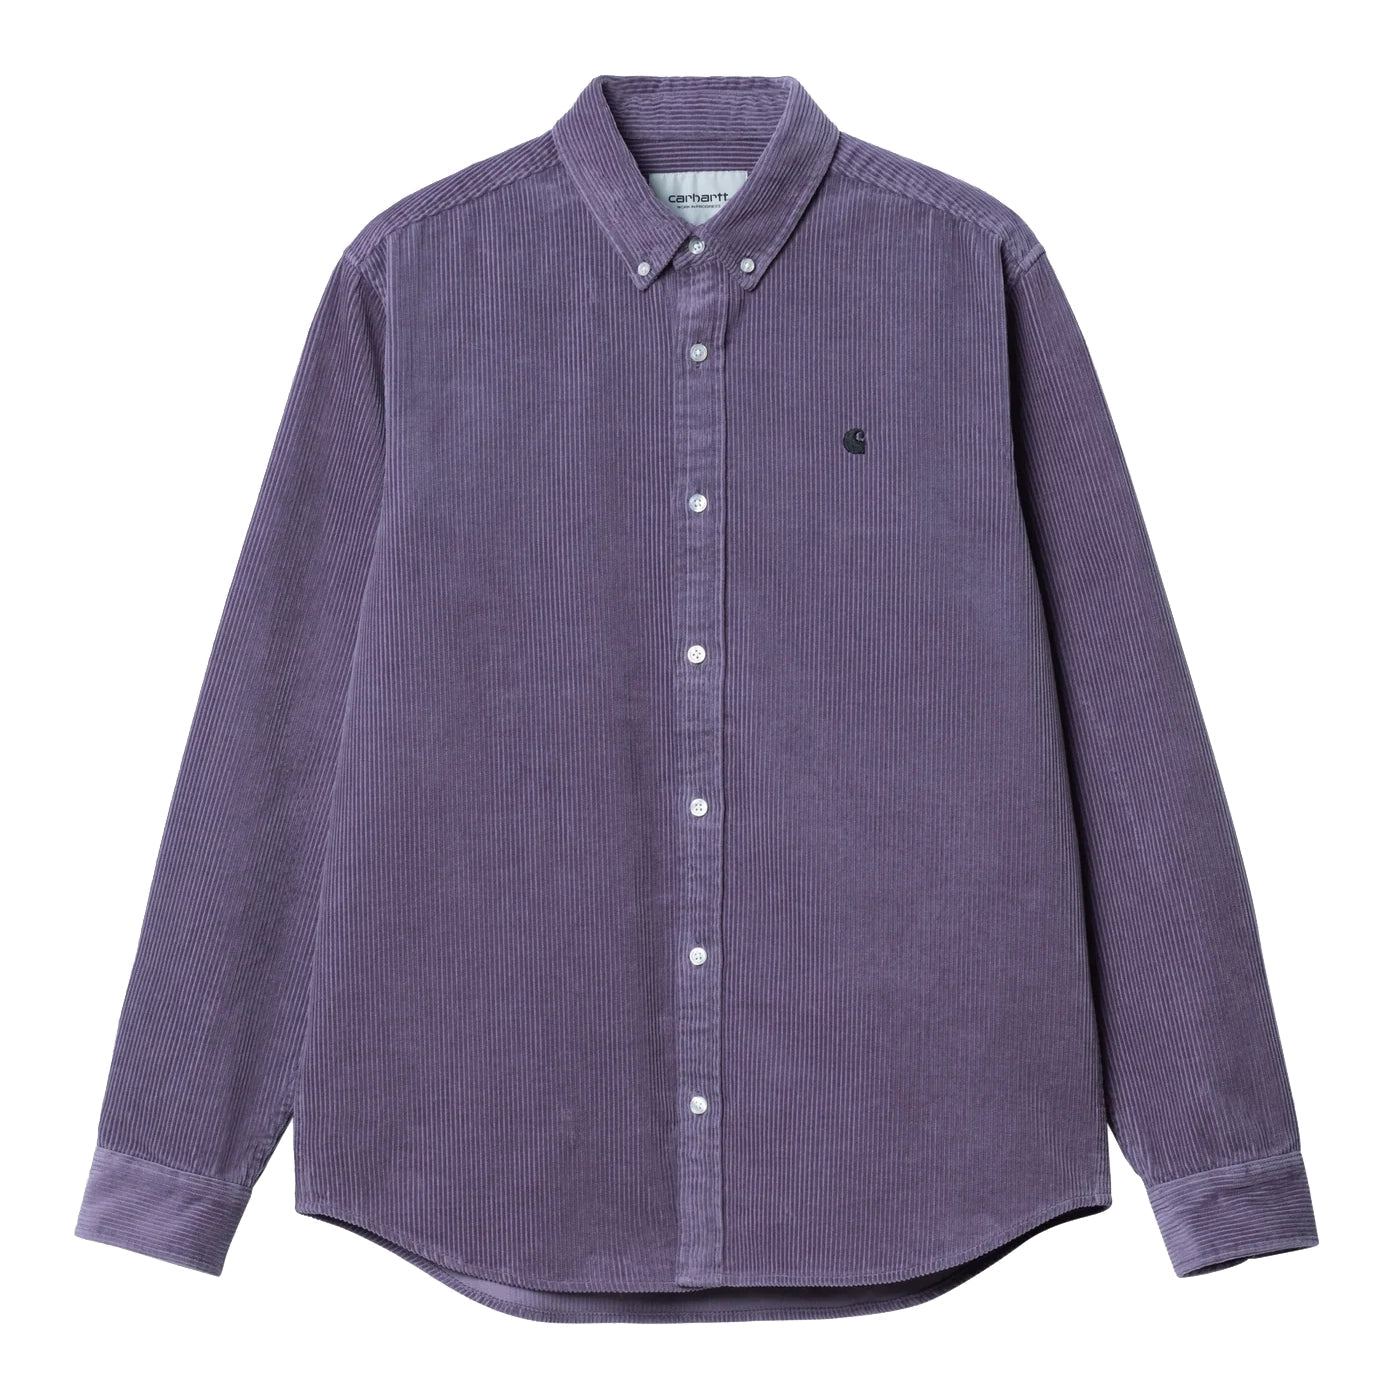 Carhartt WIP L/S Madison Cord Shirt Glassy Purple/Black shirts Carhartt WIP 